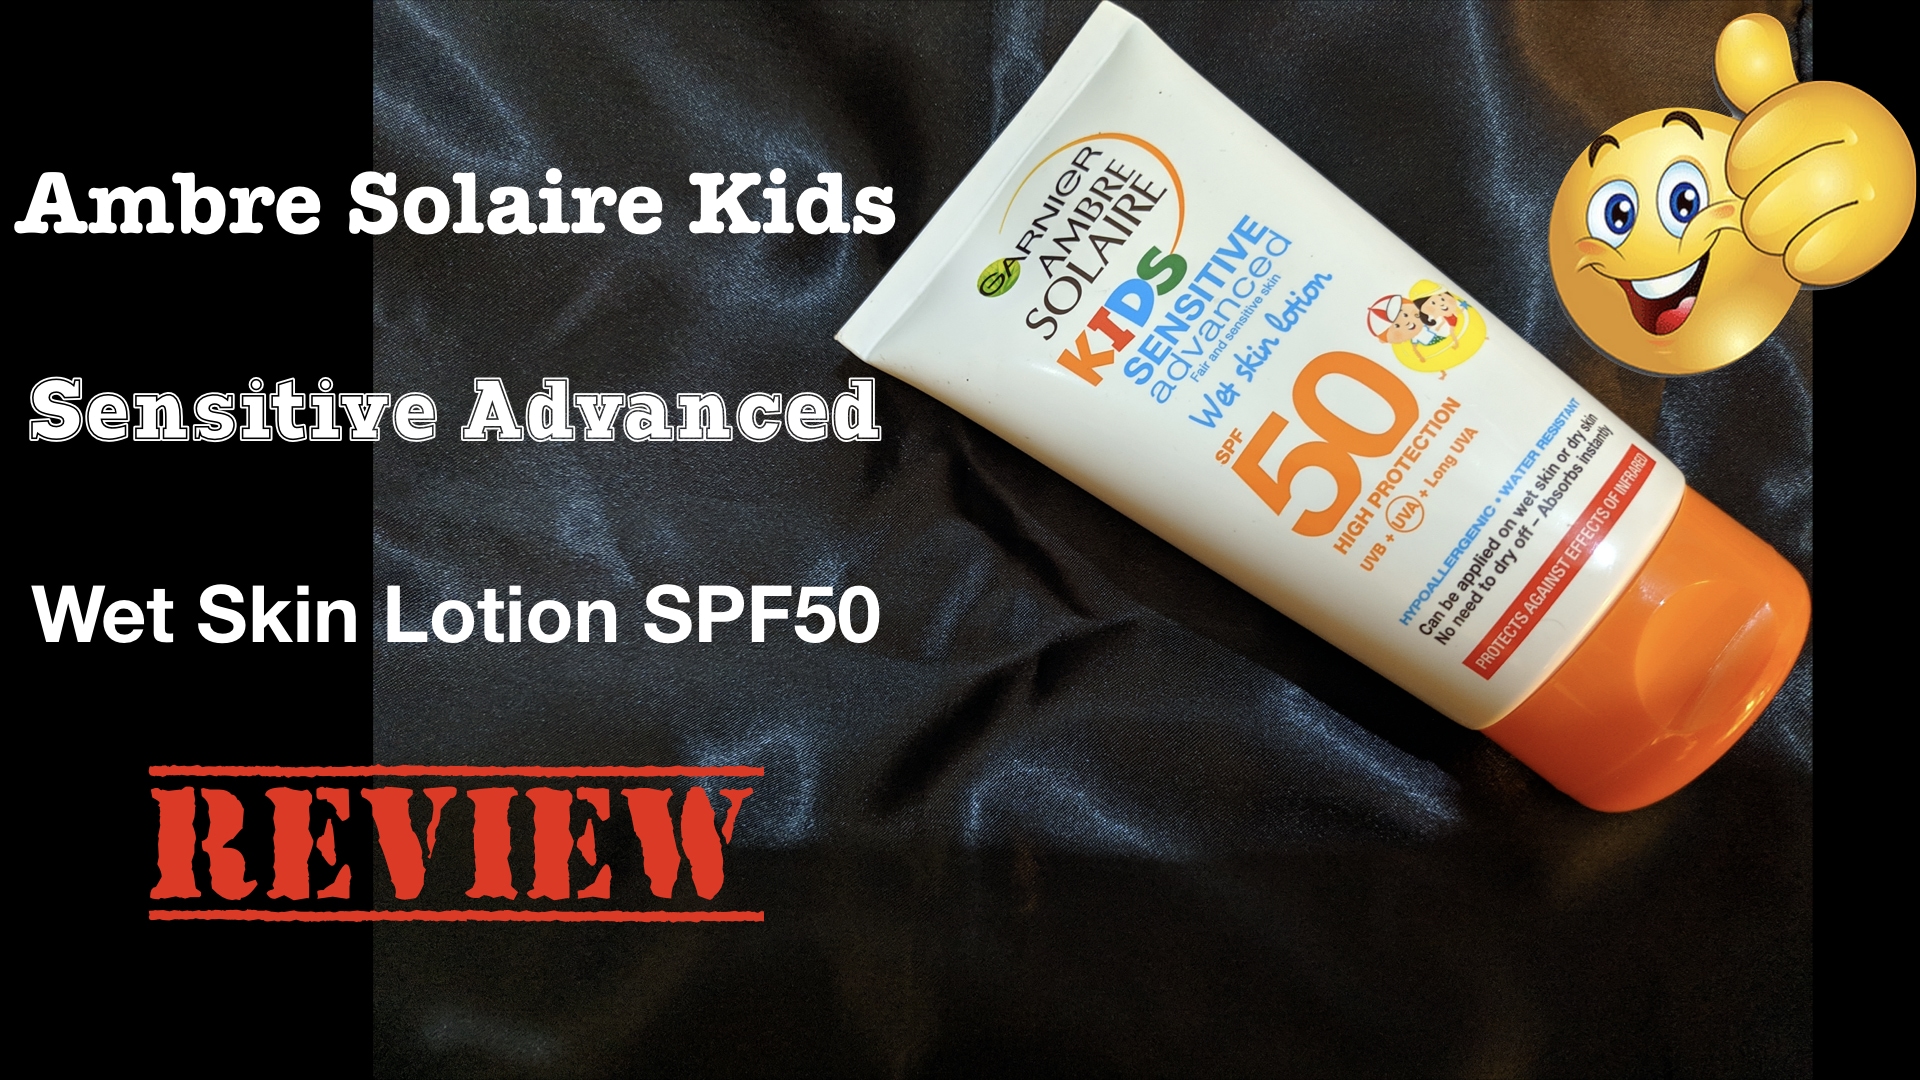 Ambre_Solaire_Kids_Sensitive_Advanced_Wet_Skin_Lotion_SPF50_Review.001